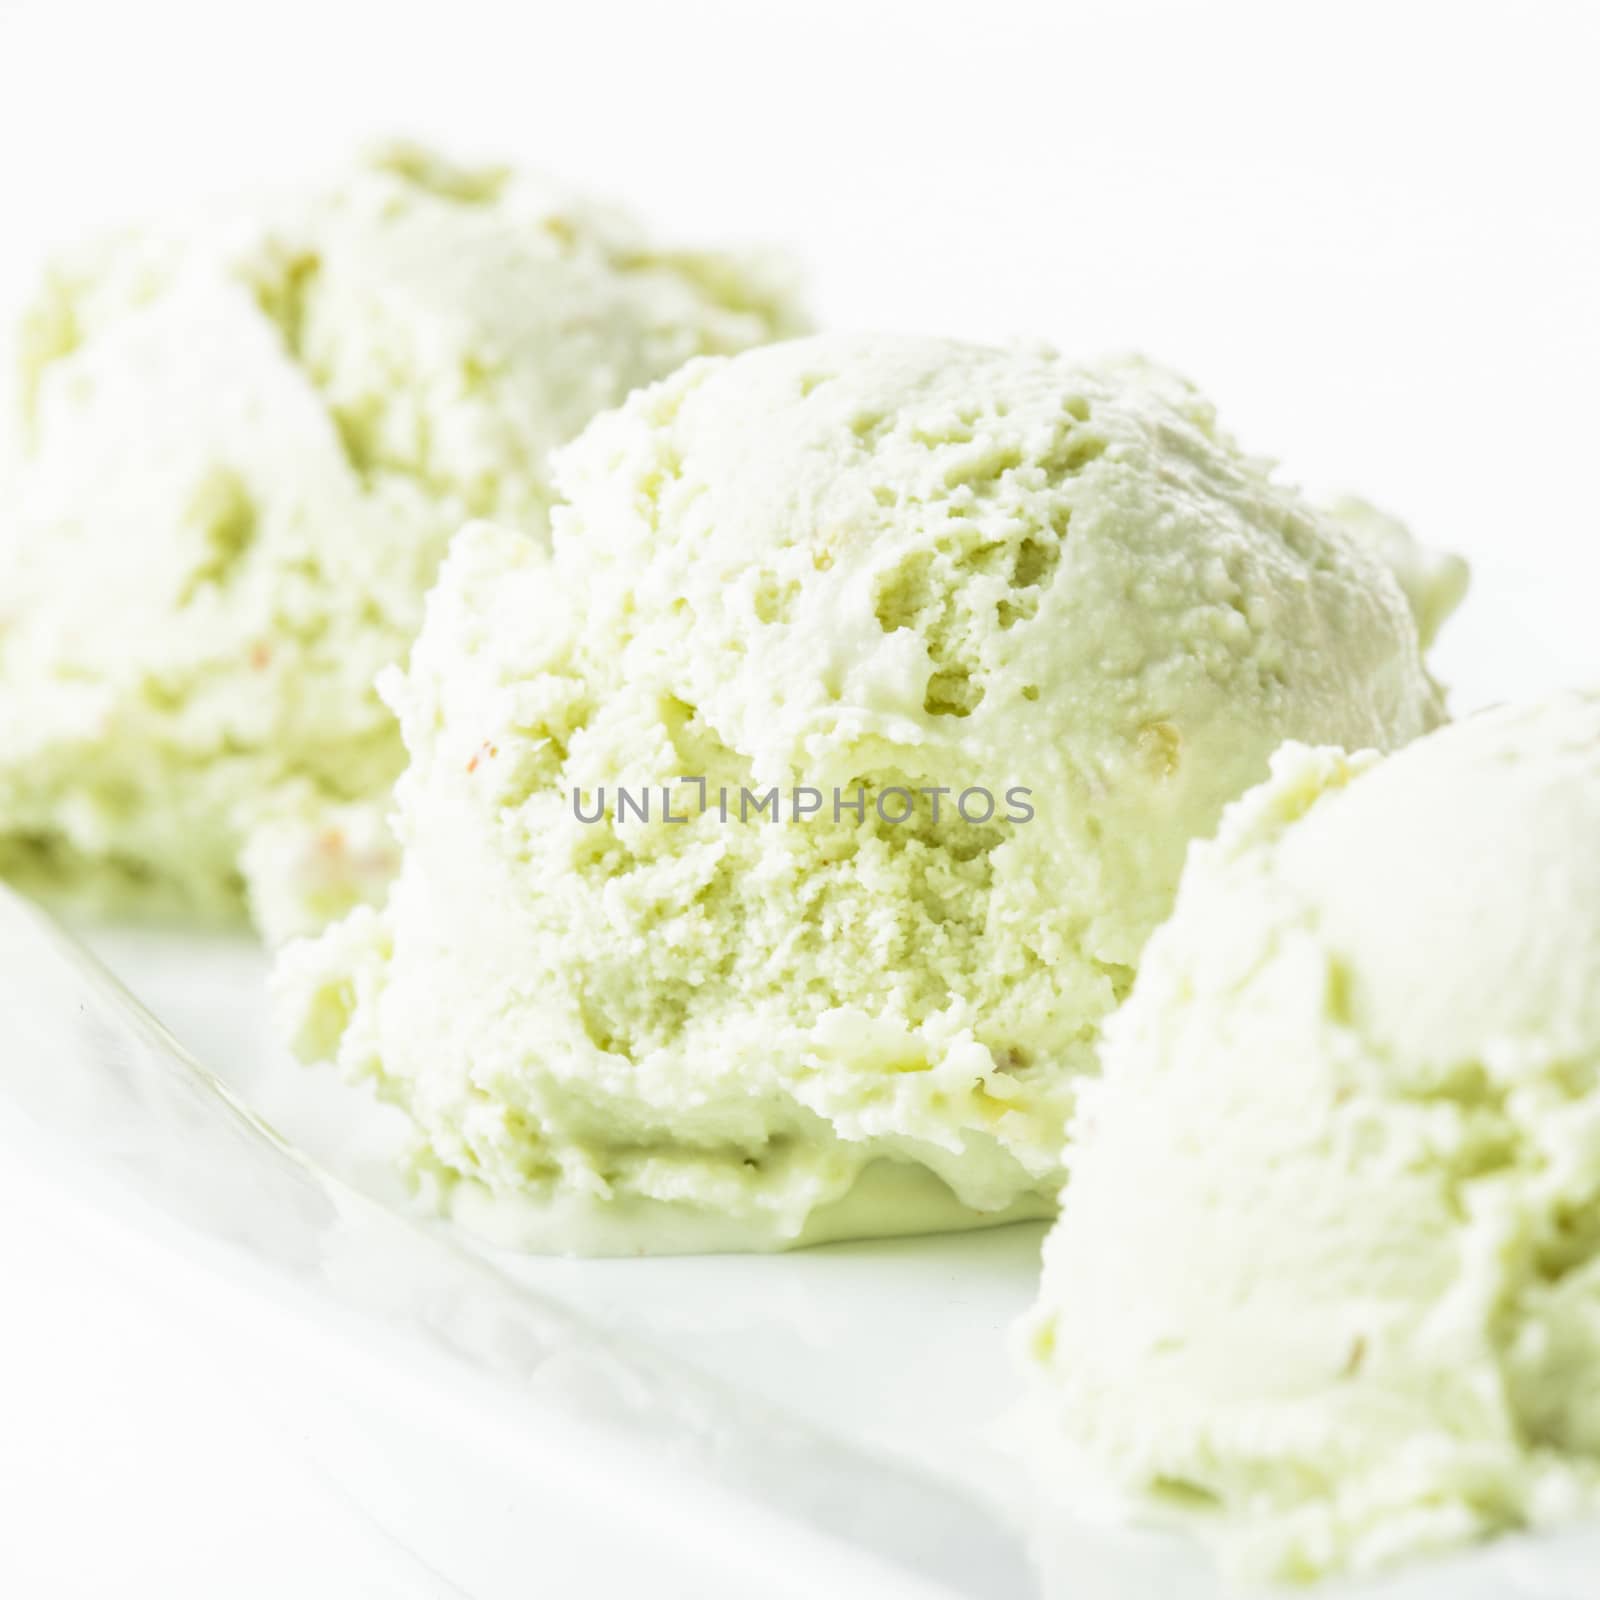 pistachio ice cream on the plate close up